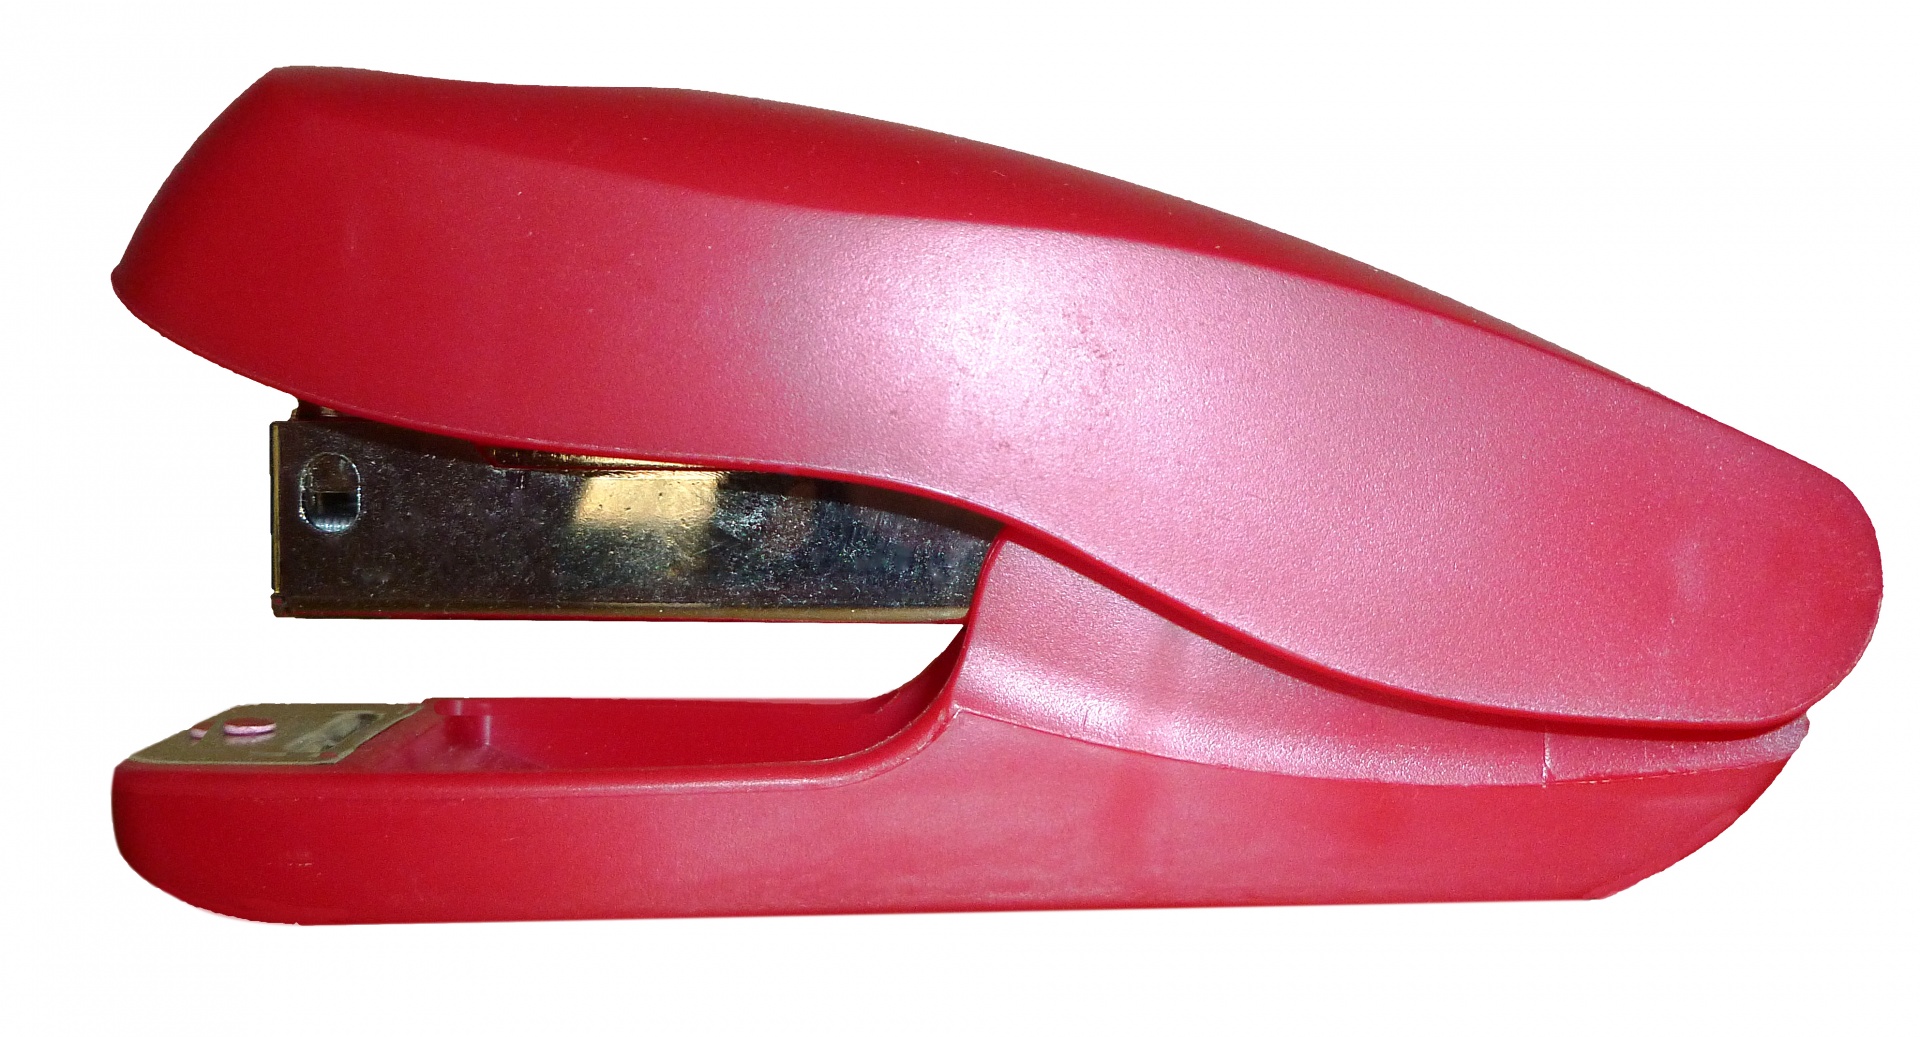 stapler red office equipment free photo